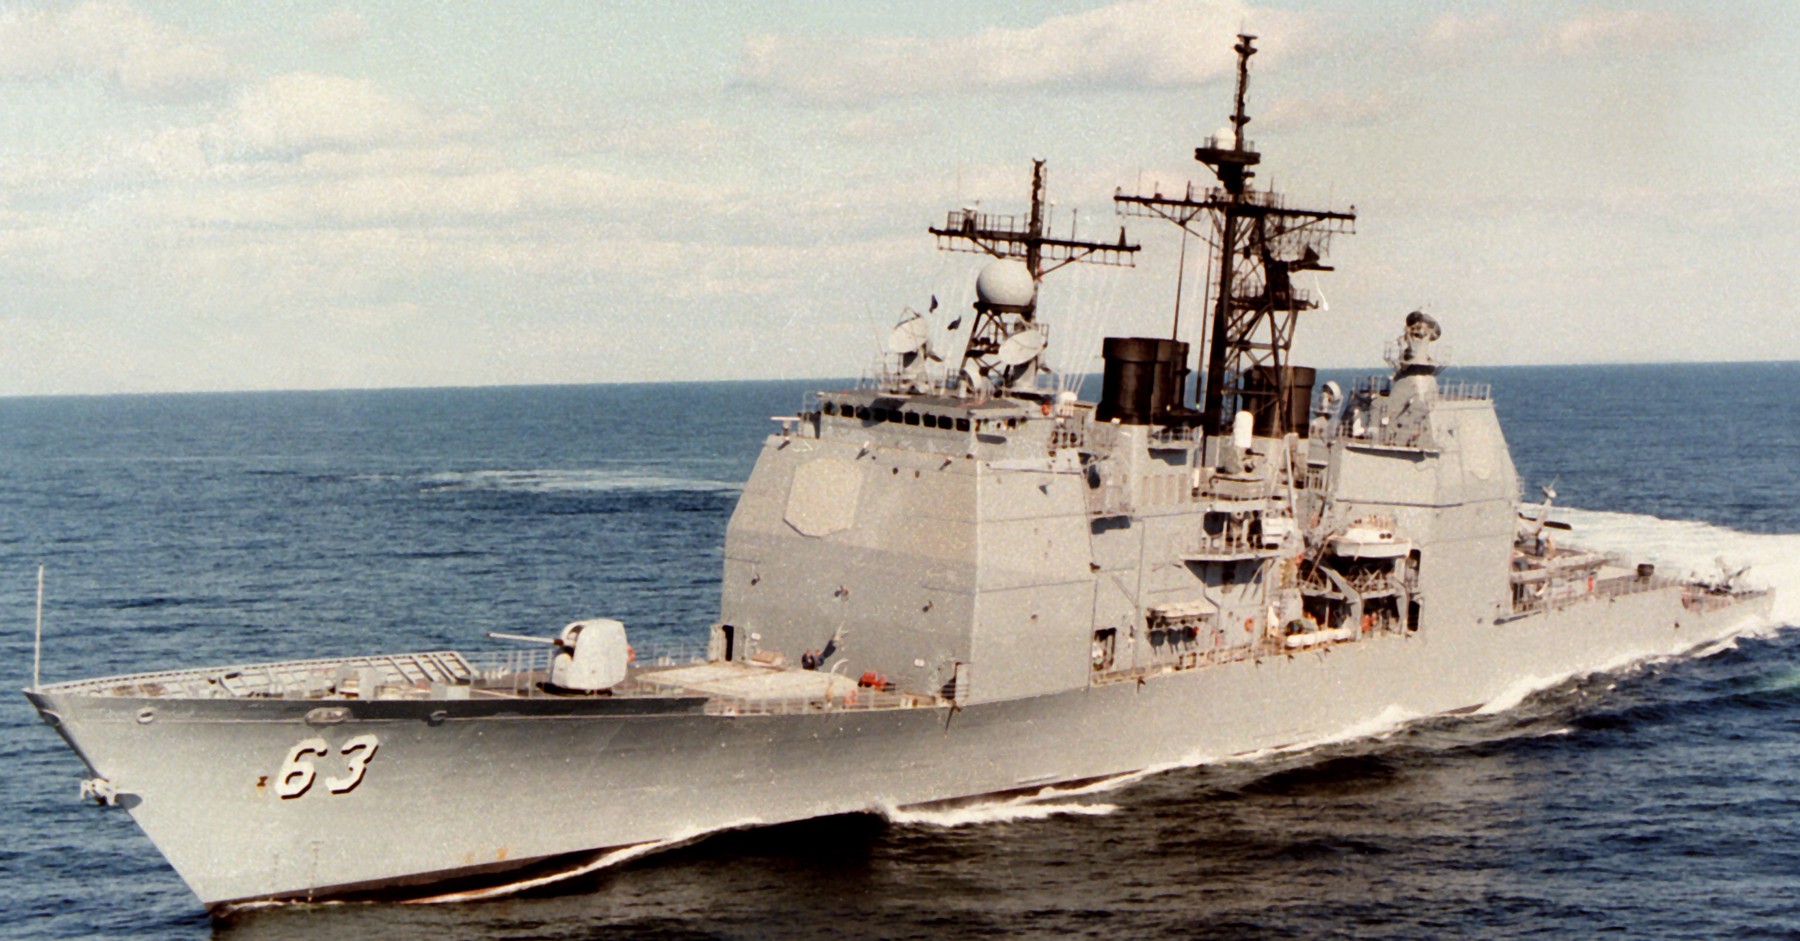 cg-63 uss cowpens ticonderoga class guided missile cruiser aegis us navy sea trials 83